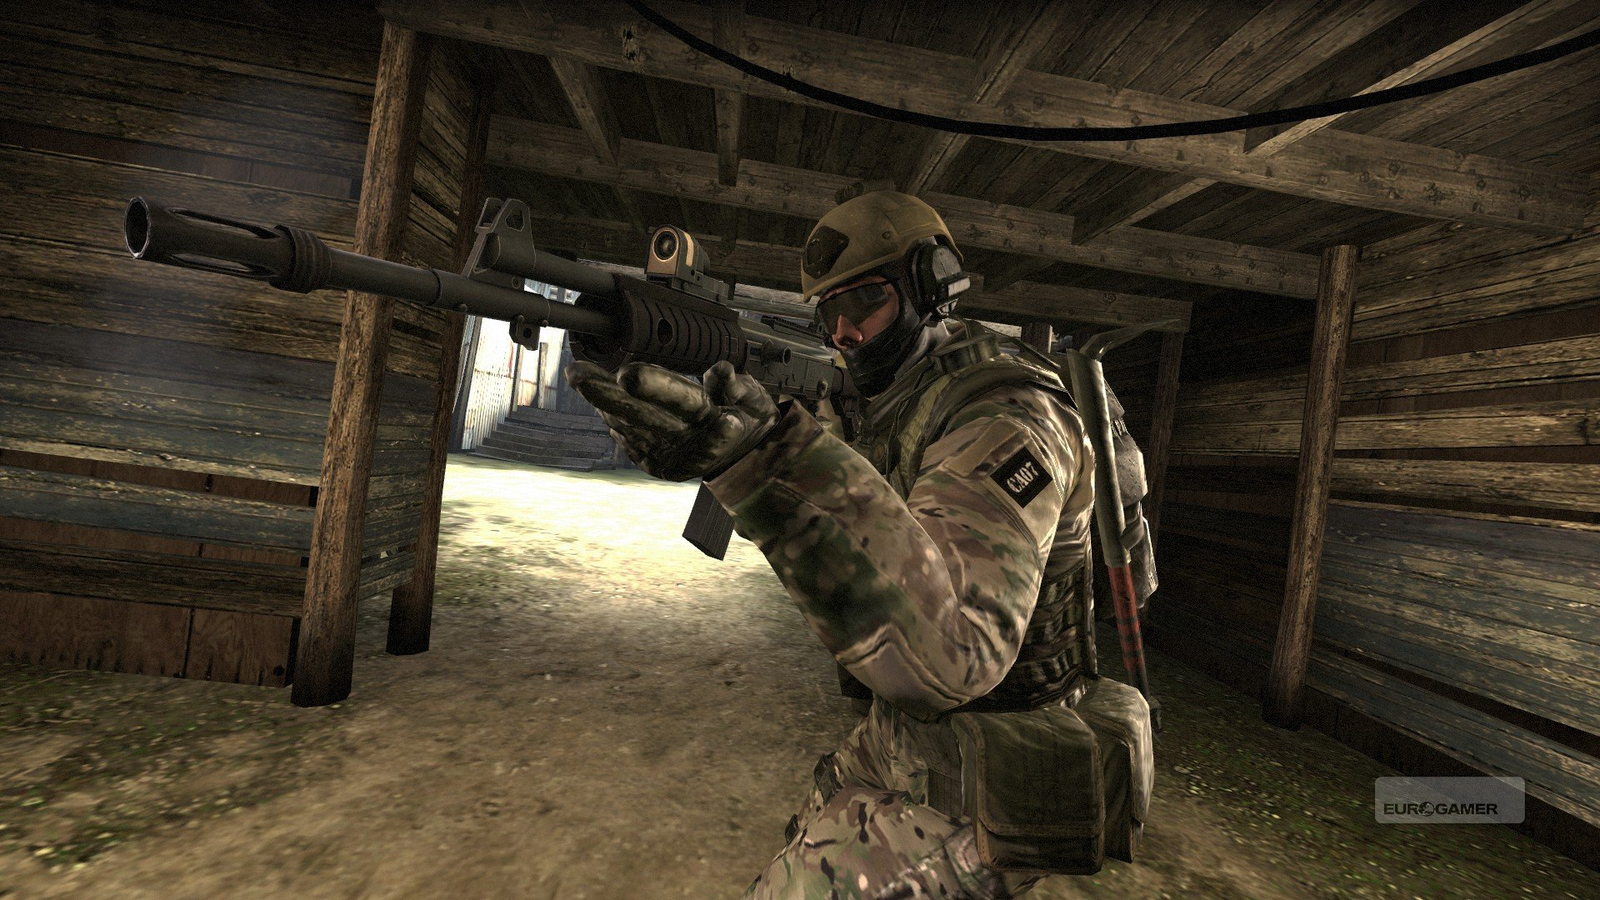 CS:GO' Breaks Player Record Thanks To 'Counter-Strike 2' Beta